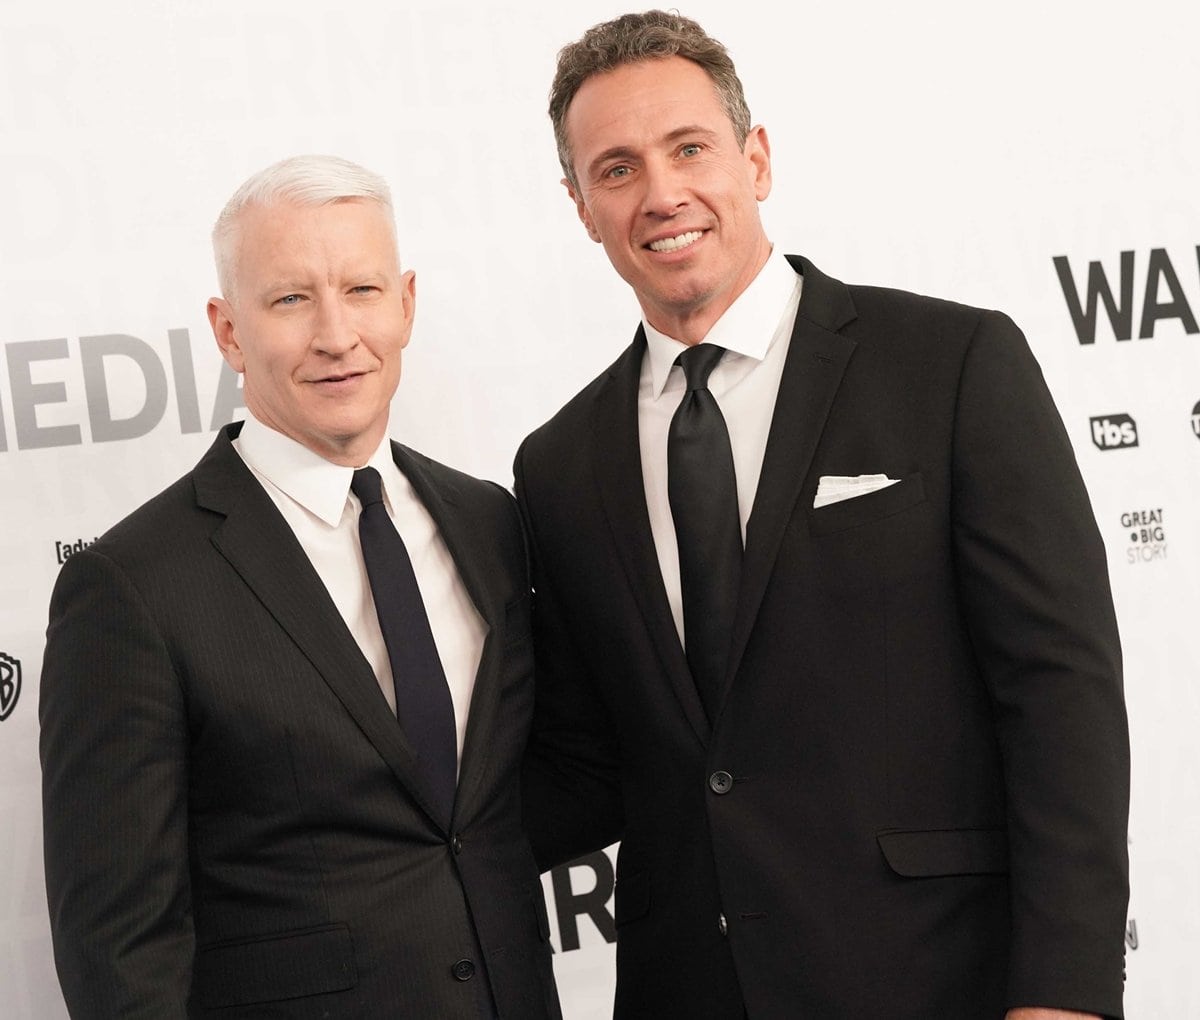 Anderson Cooper of CNN’s Anderson Cooper 360° and Chris Cuomo of CNN’s Cuomo Prime Time attend the WarnerMedia Upfront 2019